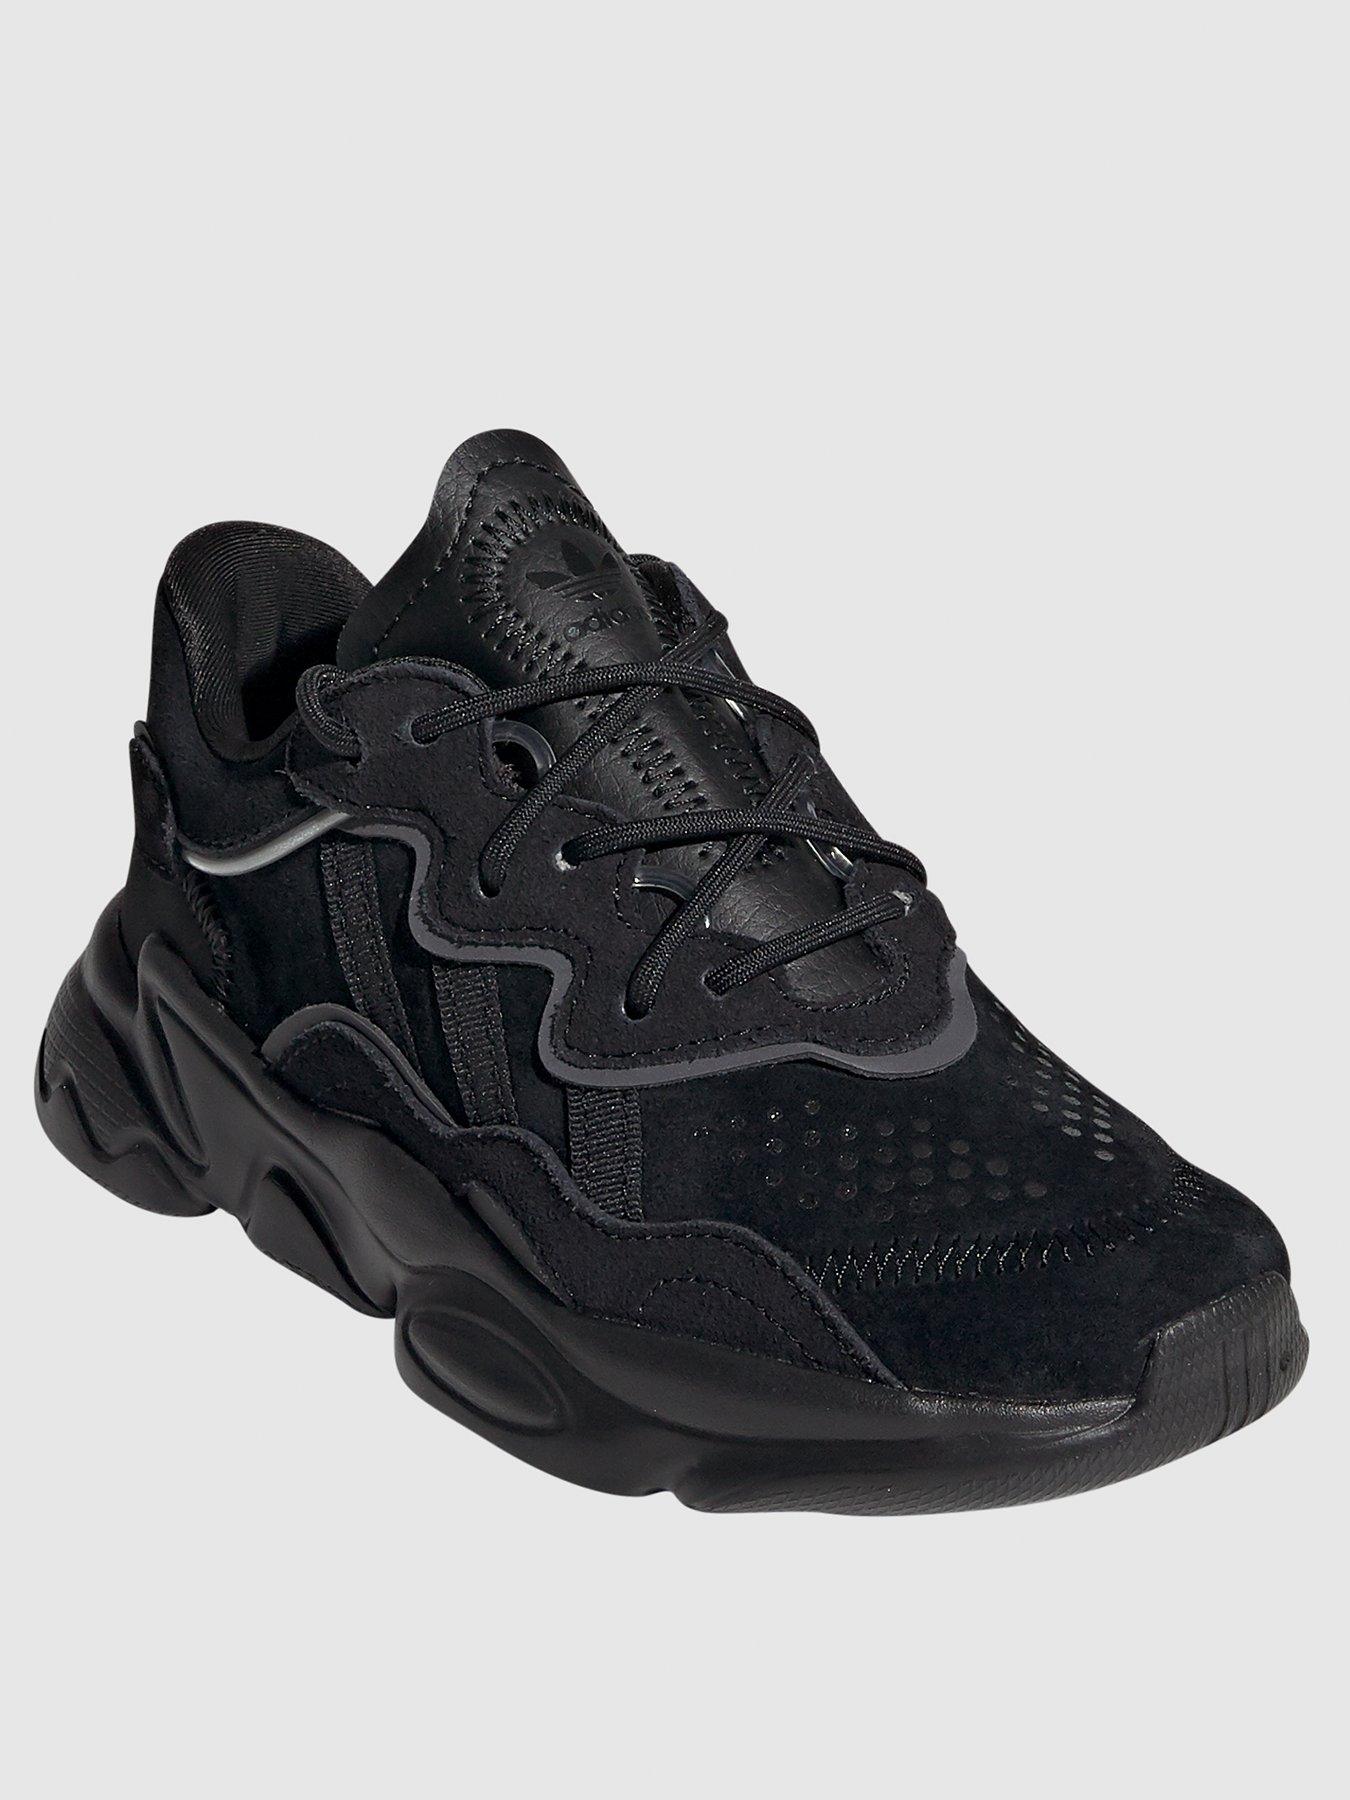 adidas ozweego trainers black